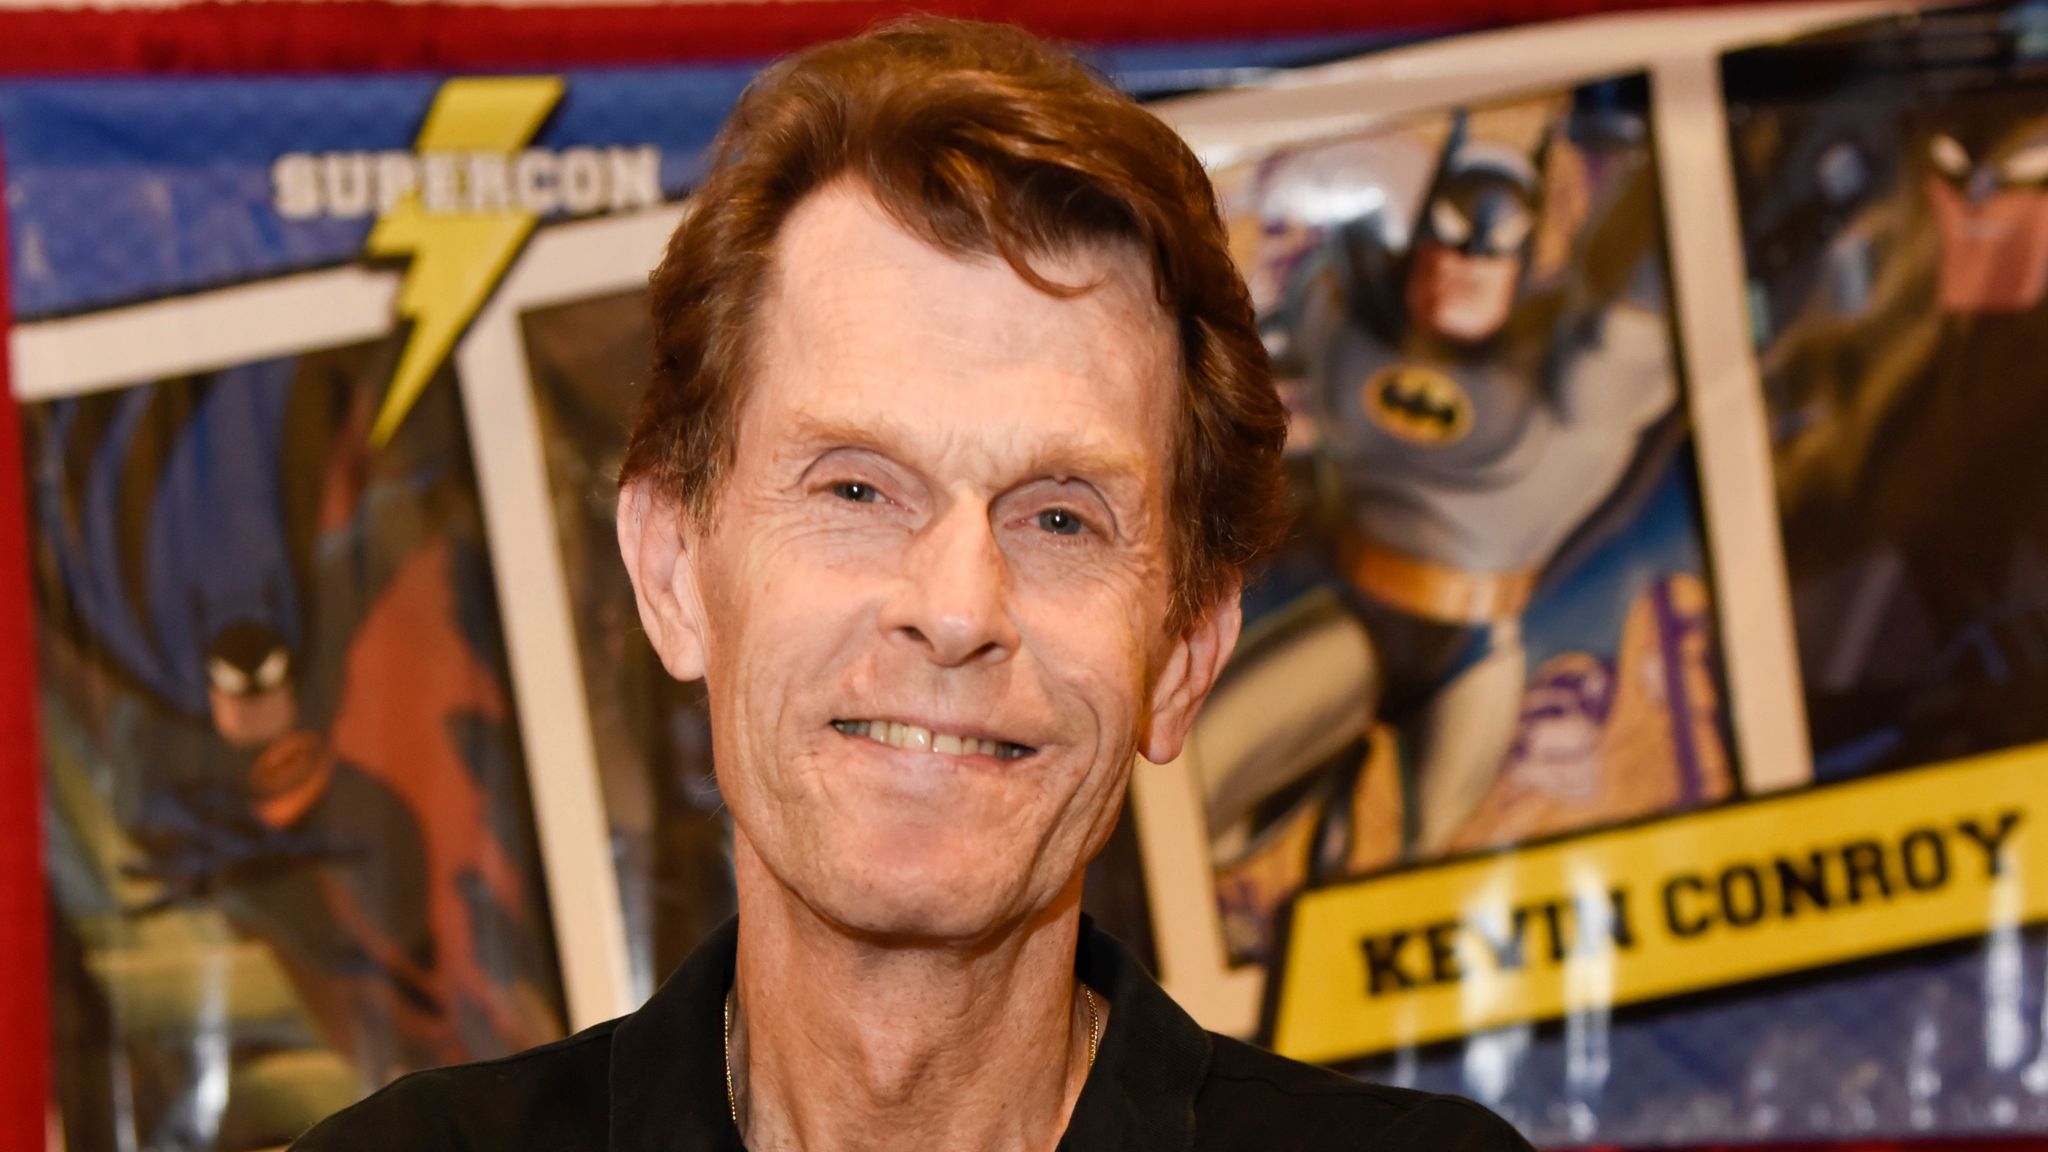 Batman voice actor Kevin Conroy dies aged 66, Ents & Arts News